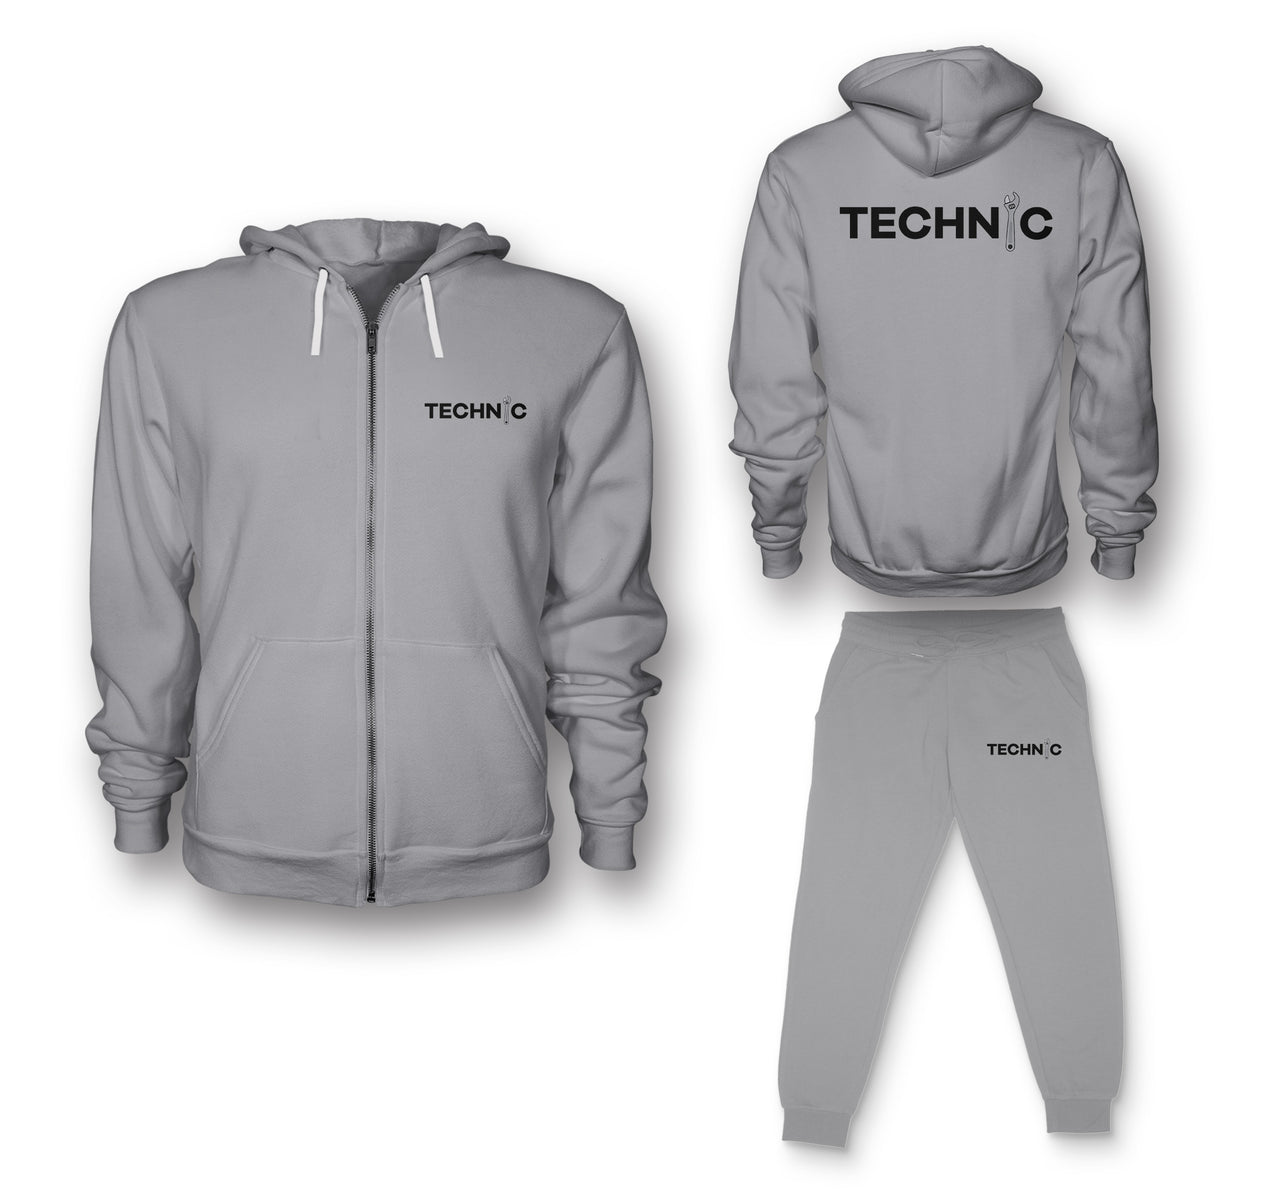 Technic Designed Zipped Hoodies & Sweatpants Set